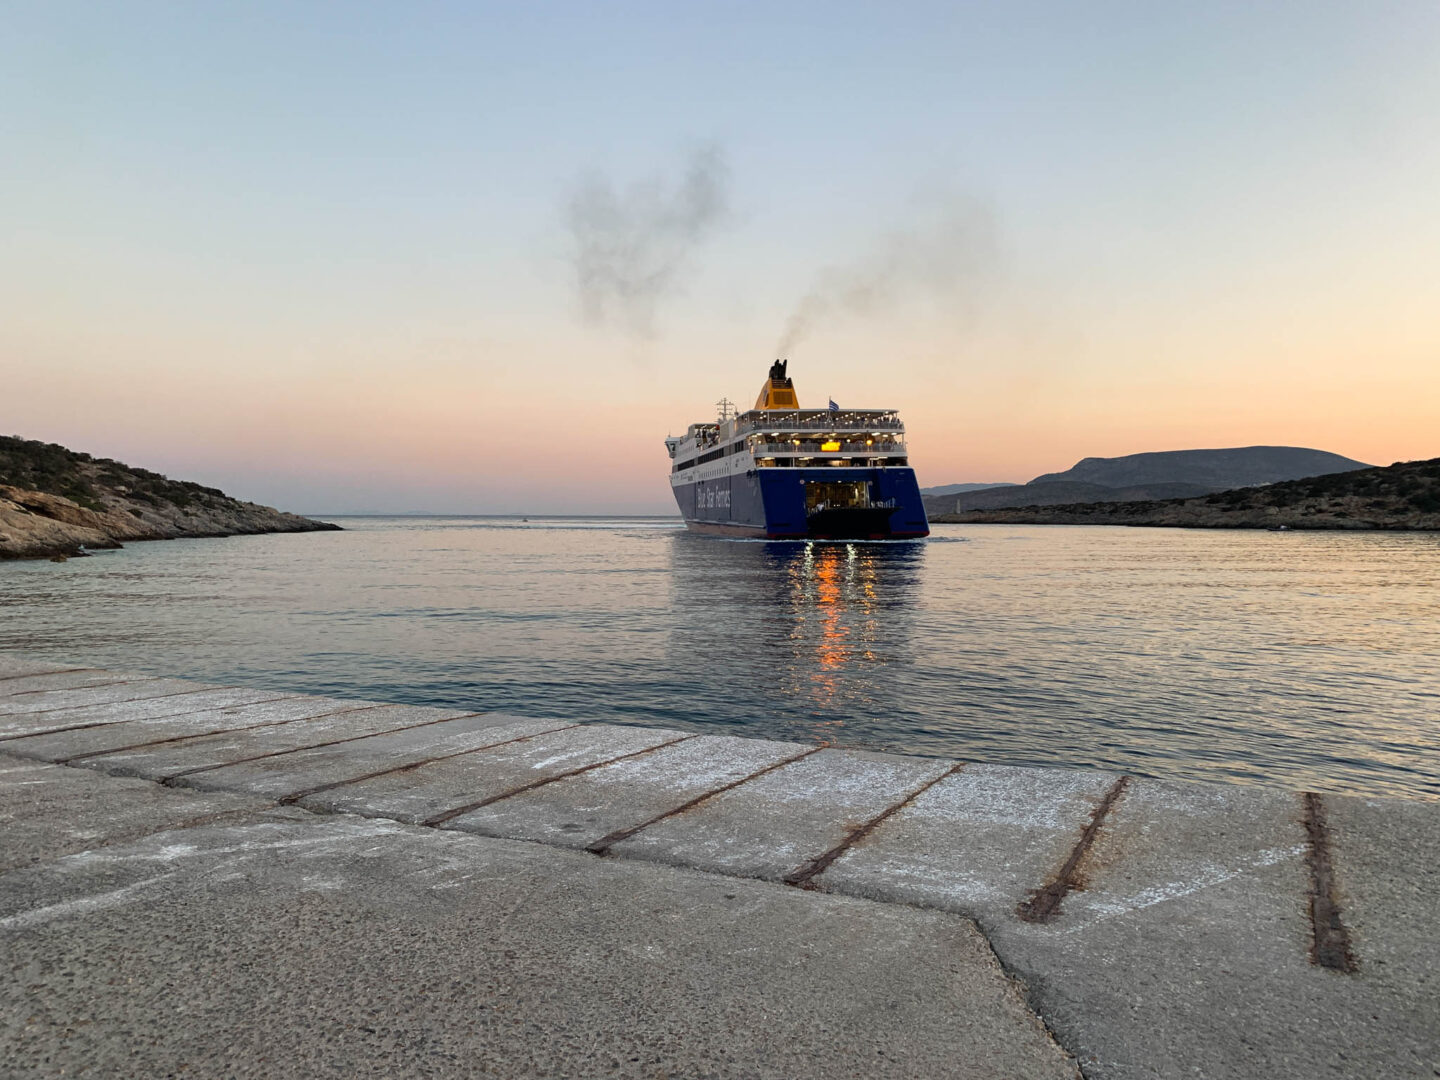 Schinousa ferry boat at dusk